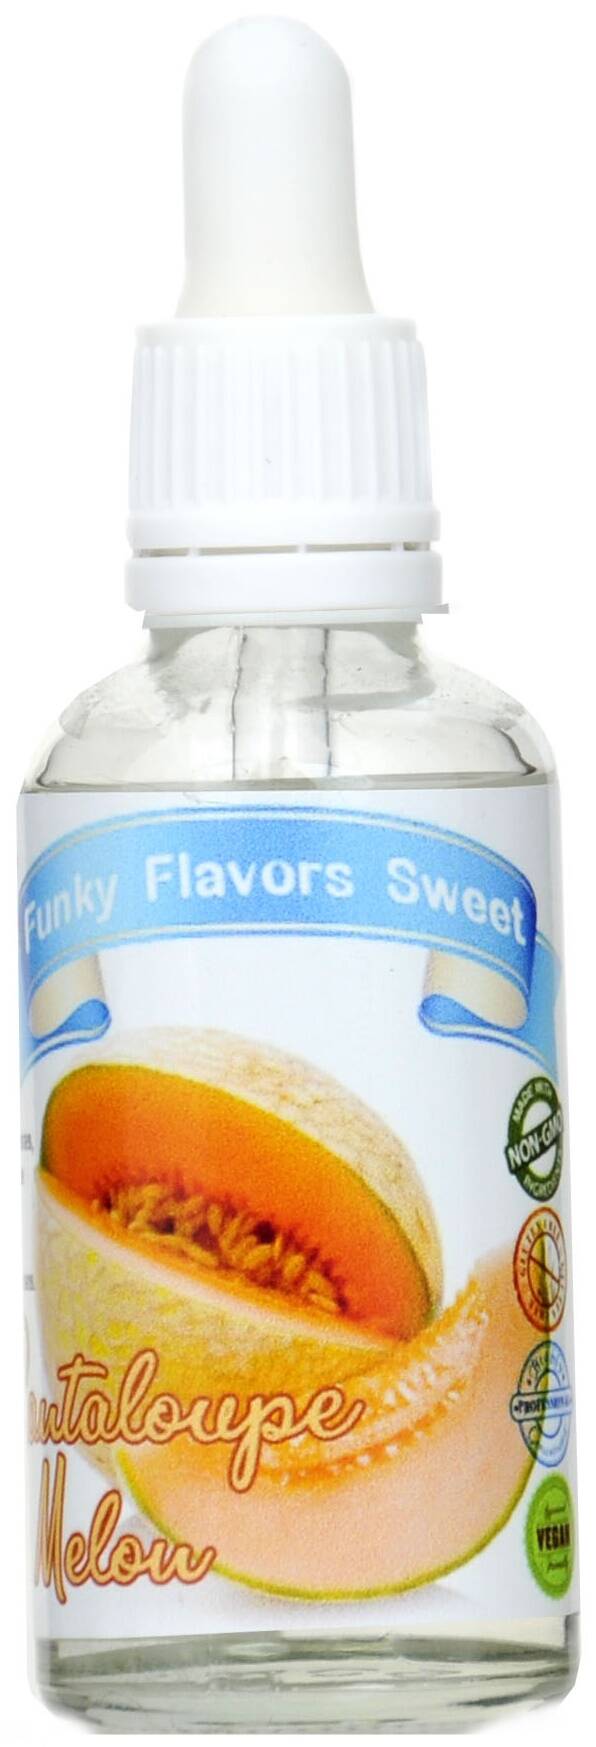 Aromat Sweet Cantaloupe Melon - melonowy 50 ml Funky Flavors